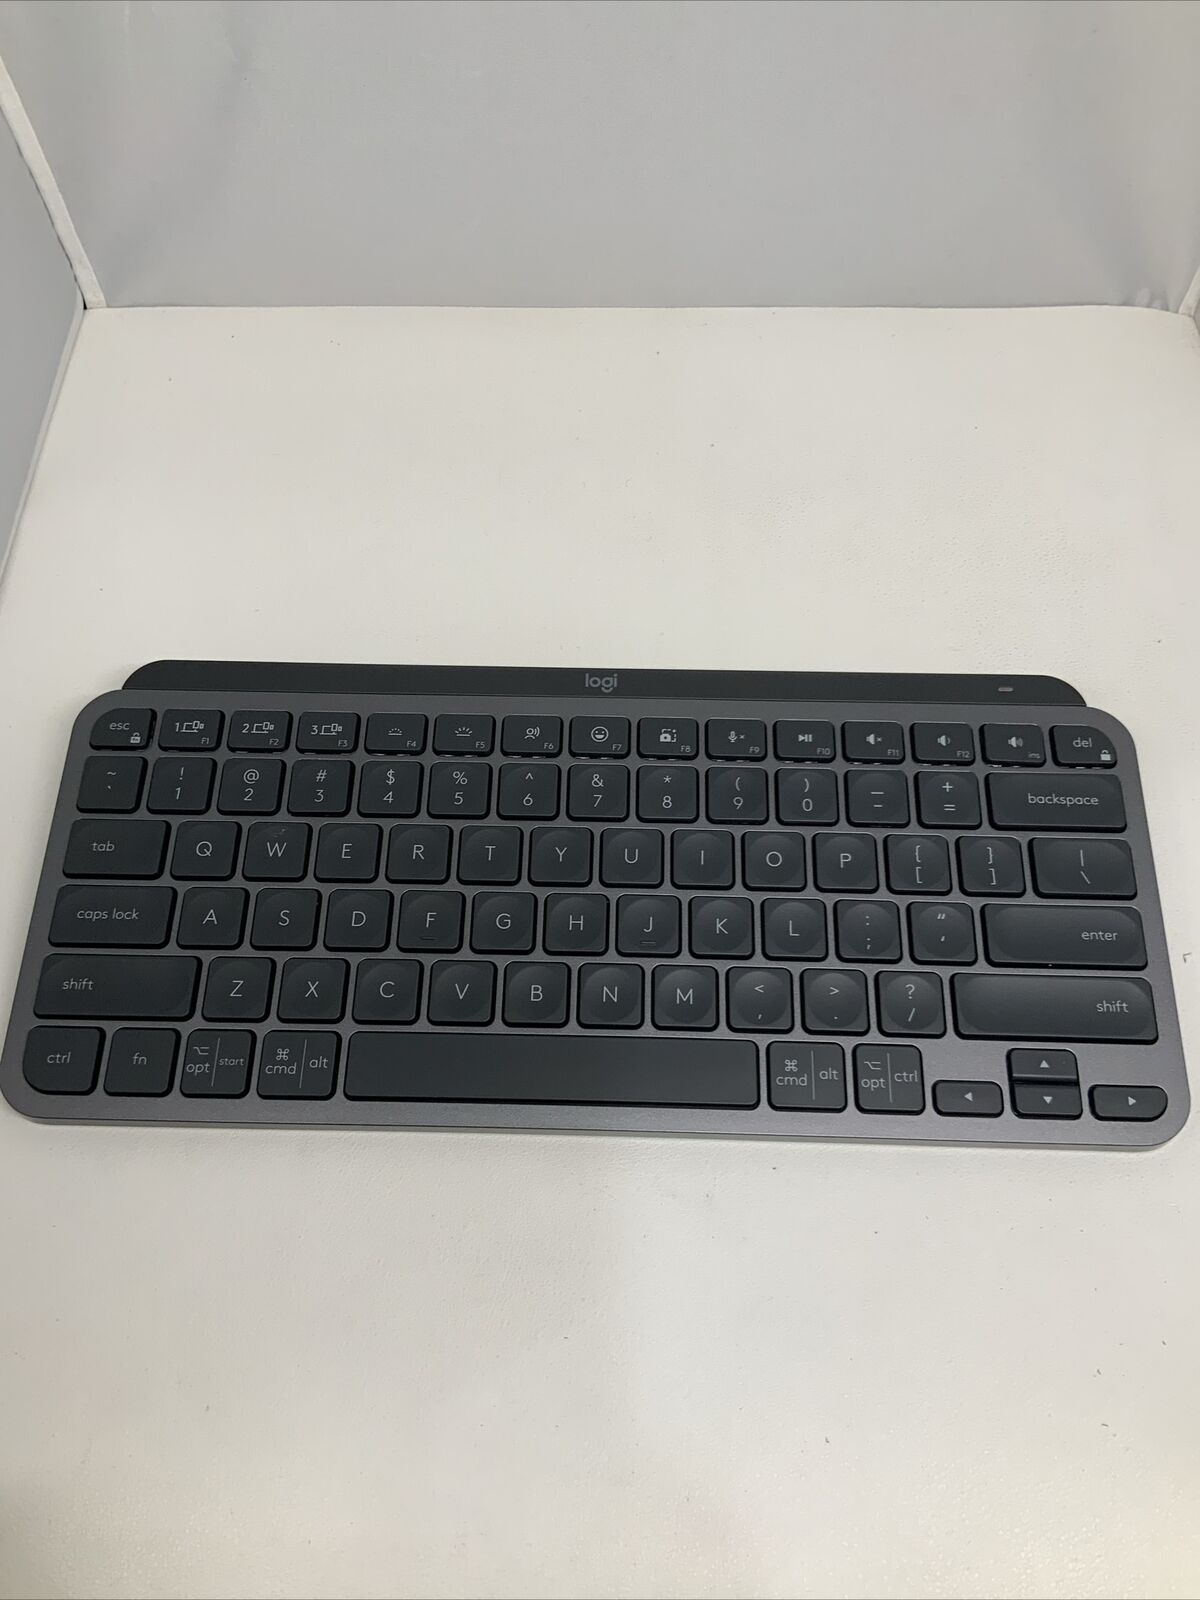 Logitech MX Keys Mini Wireless Keyboard (Graphite/Gray) Tested And Working